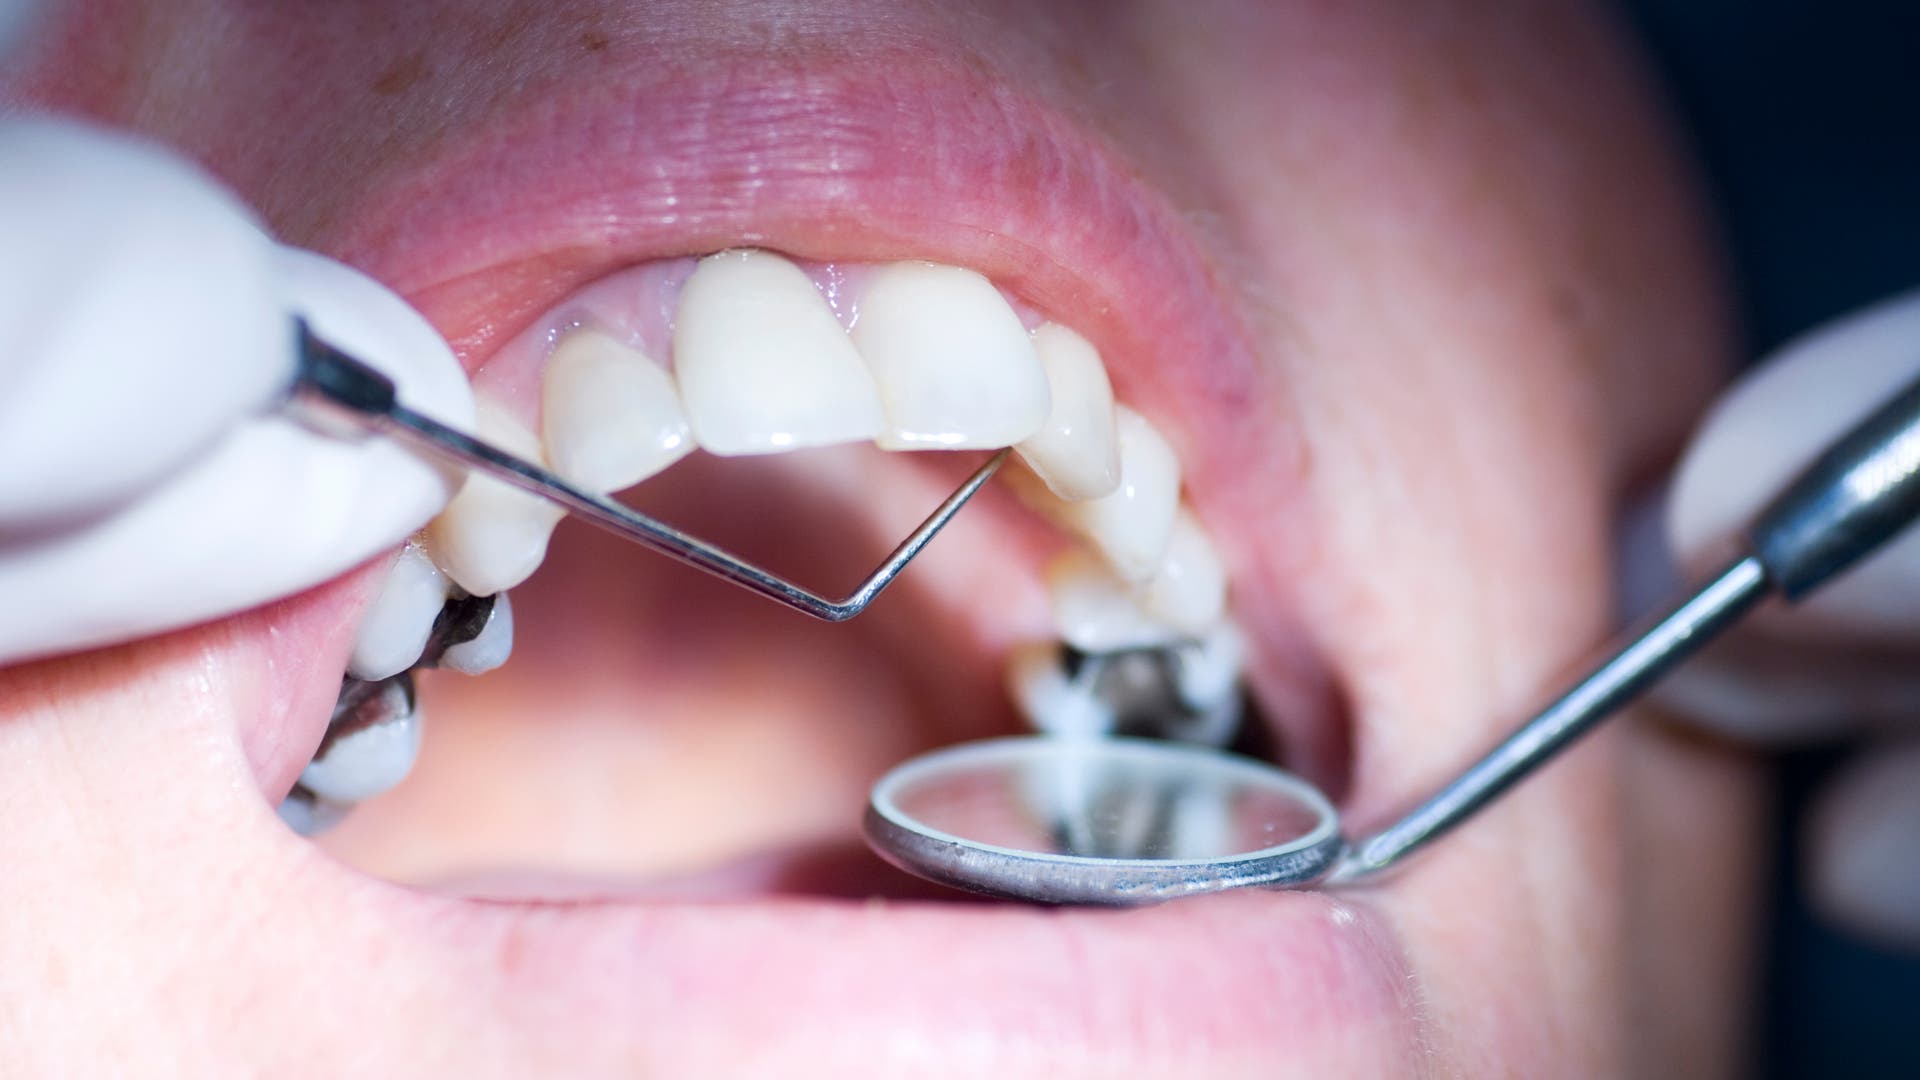 Mercury: The European Union agrees to ban amalgam dental fillings